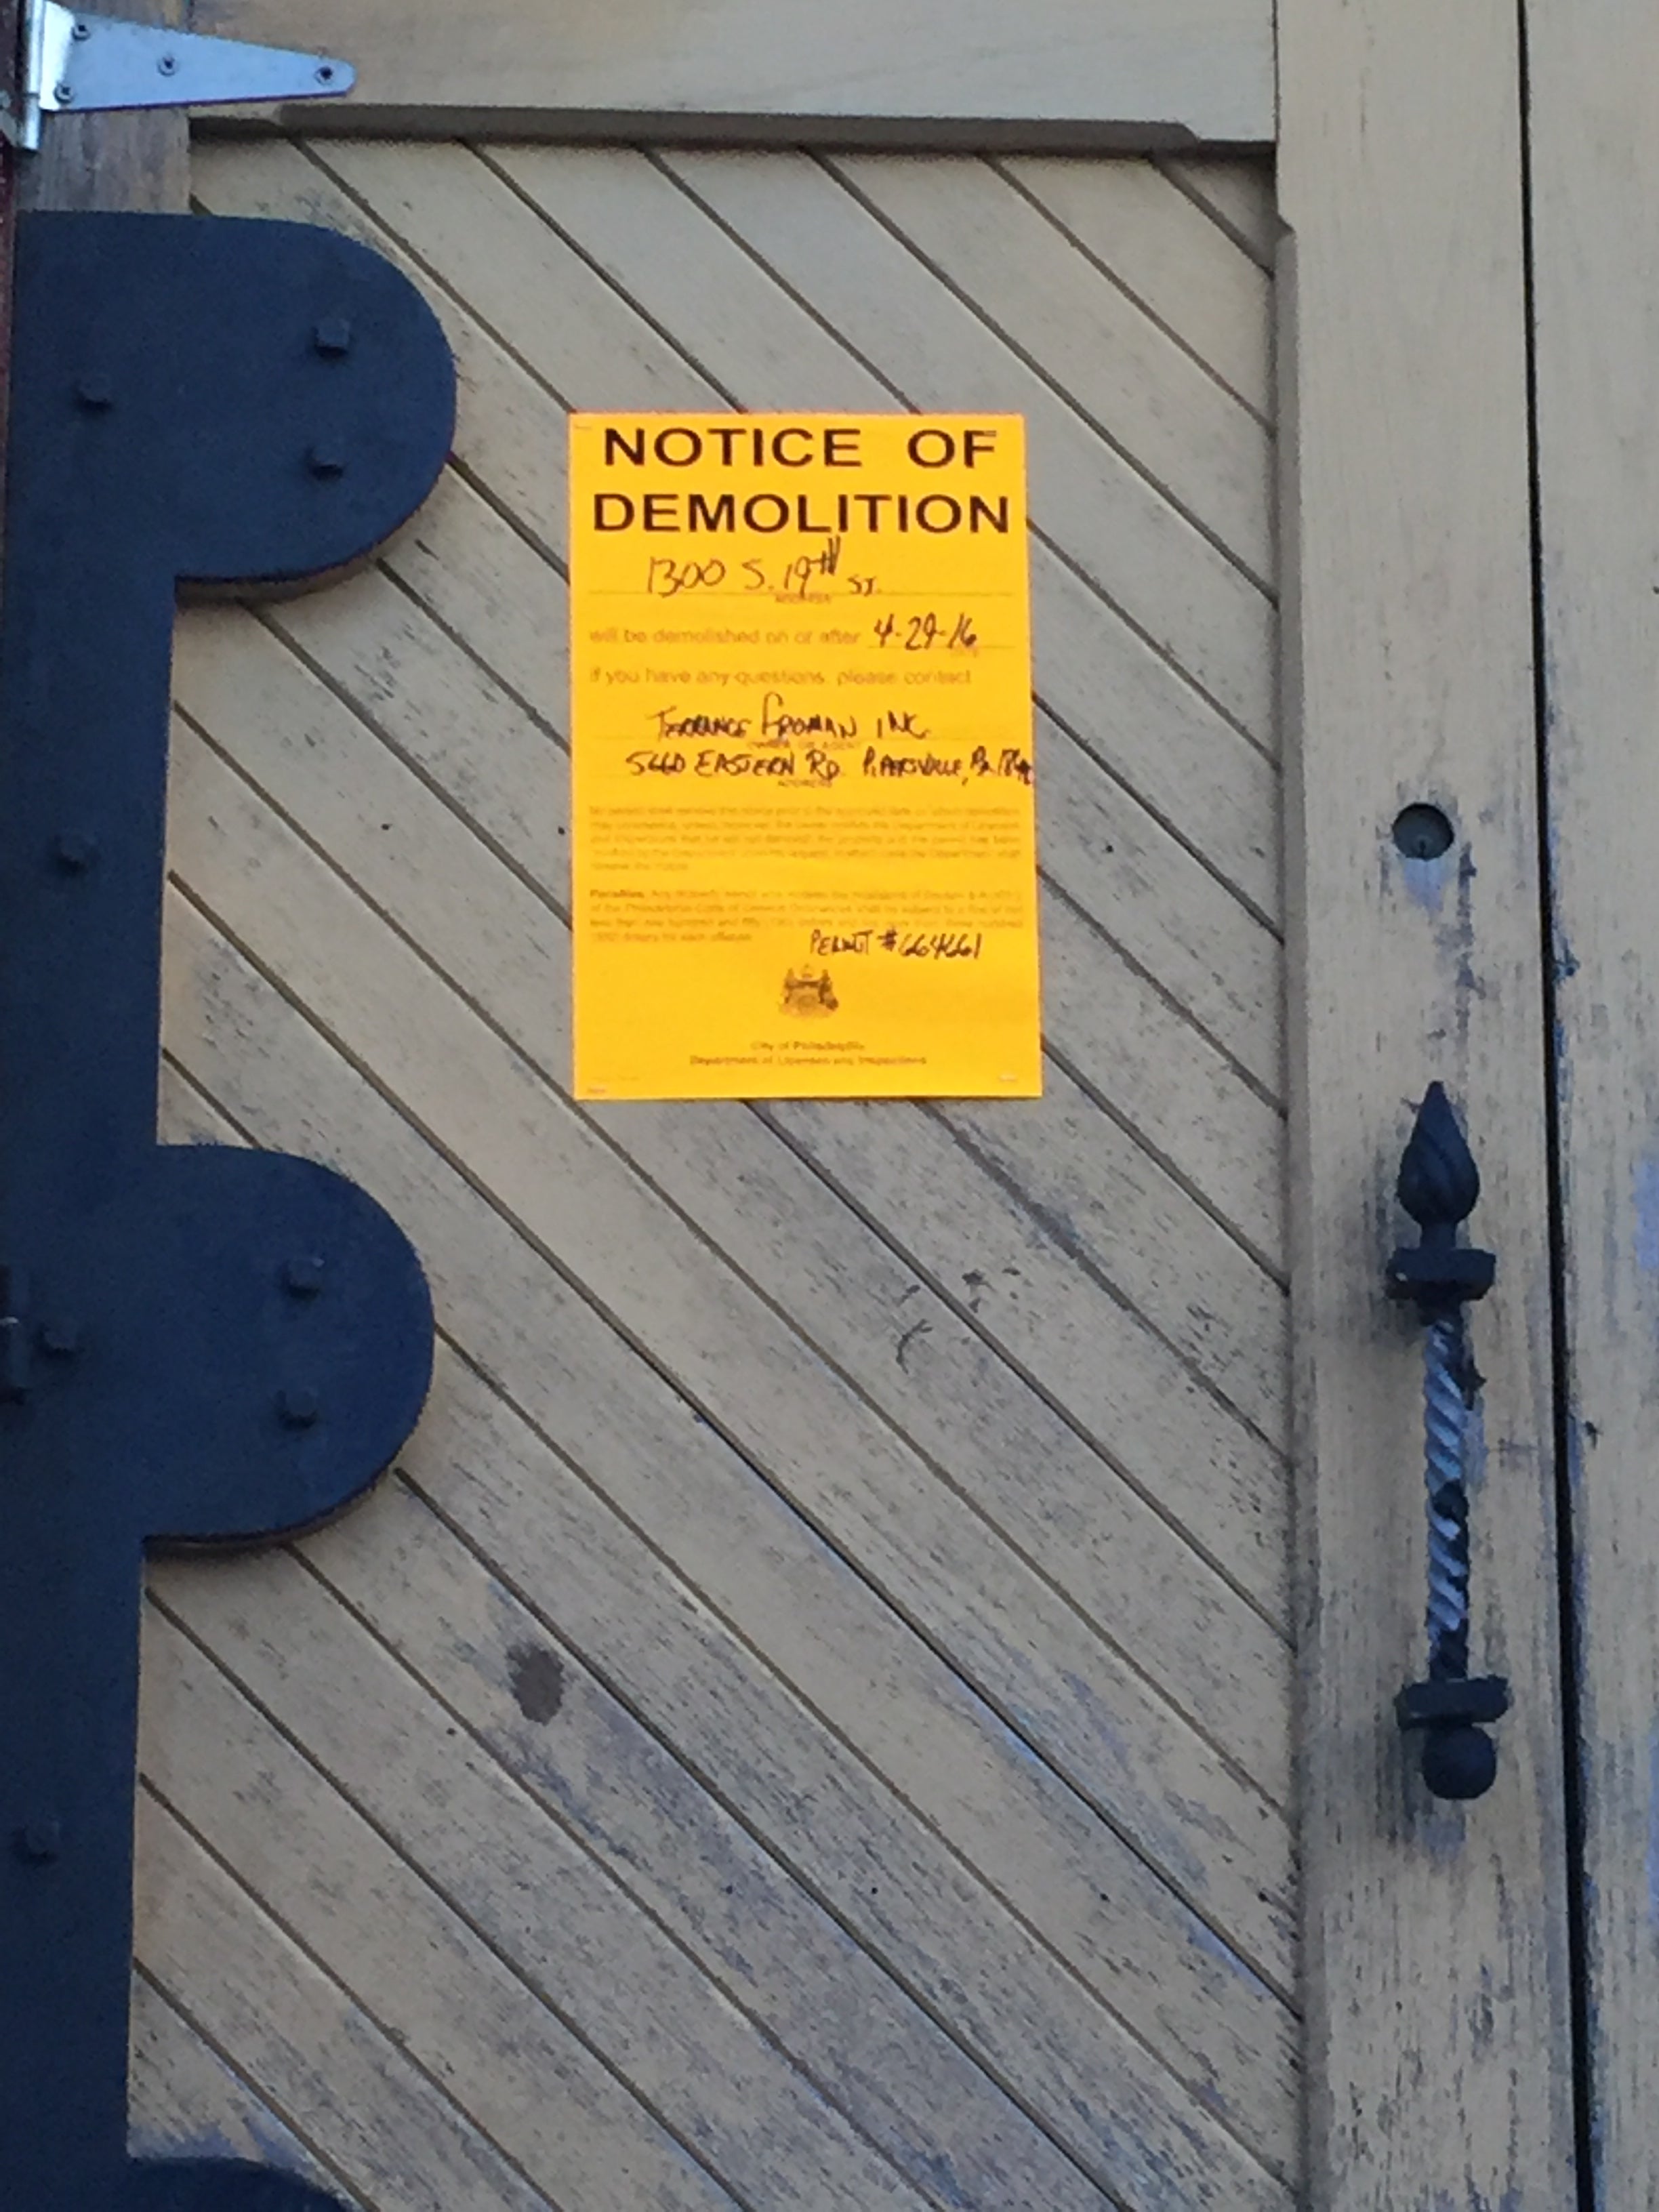 This demolition notice was placed on 19th Street Baptist Church's door in error.